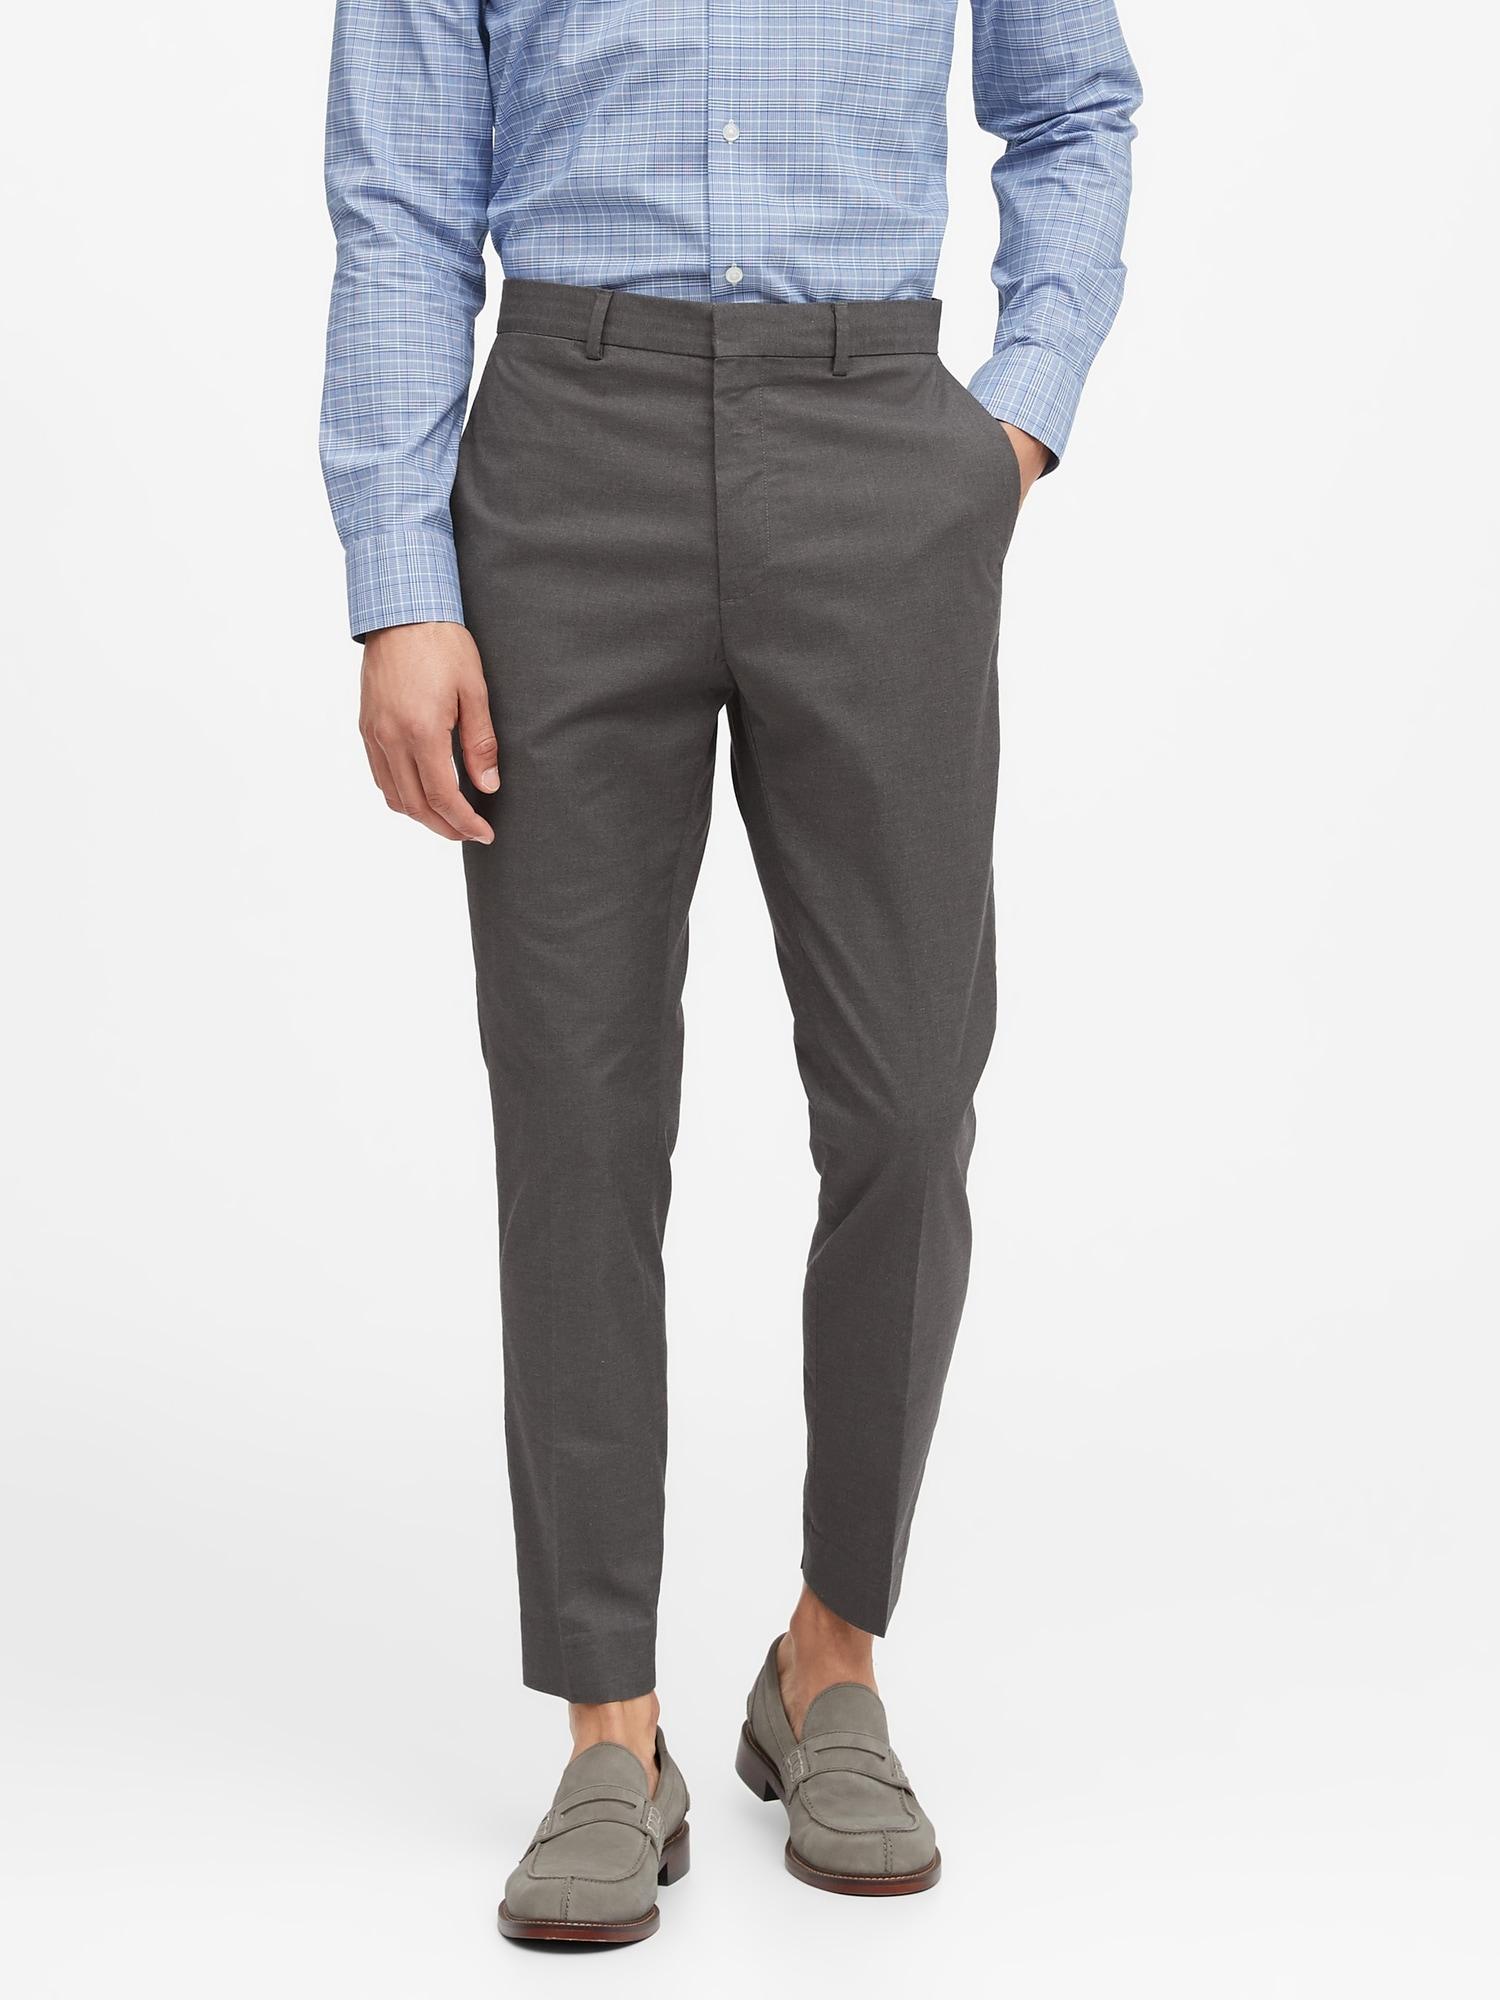 Banana Republic Slim Core Temp Non-iron Dress Pant in Gray for Men - Lyst